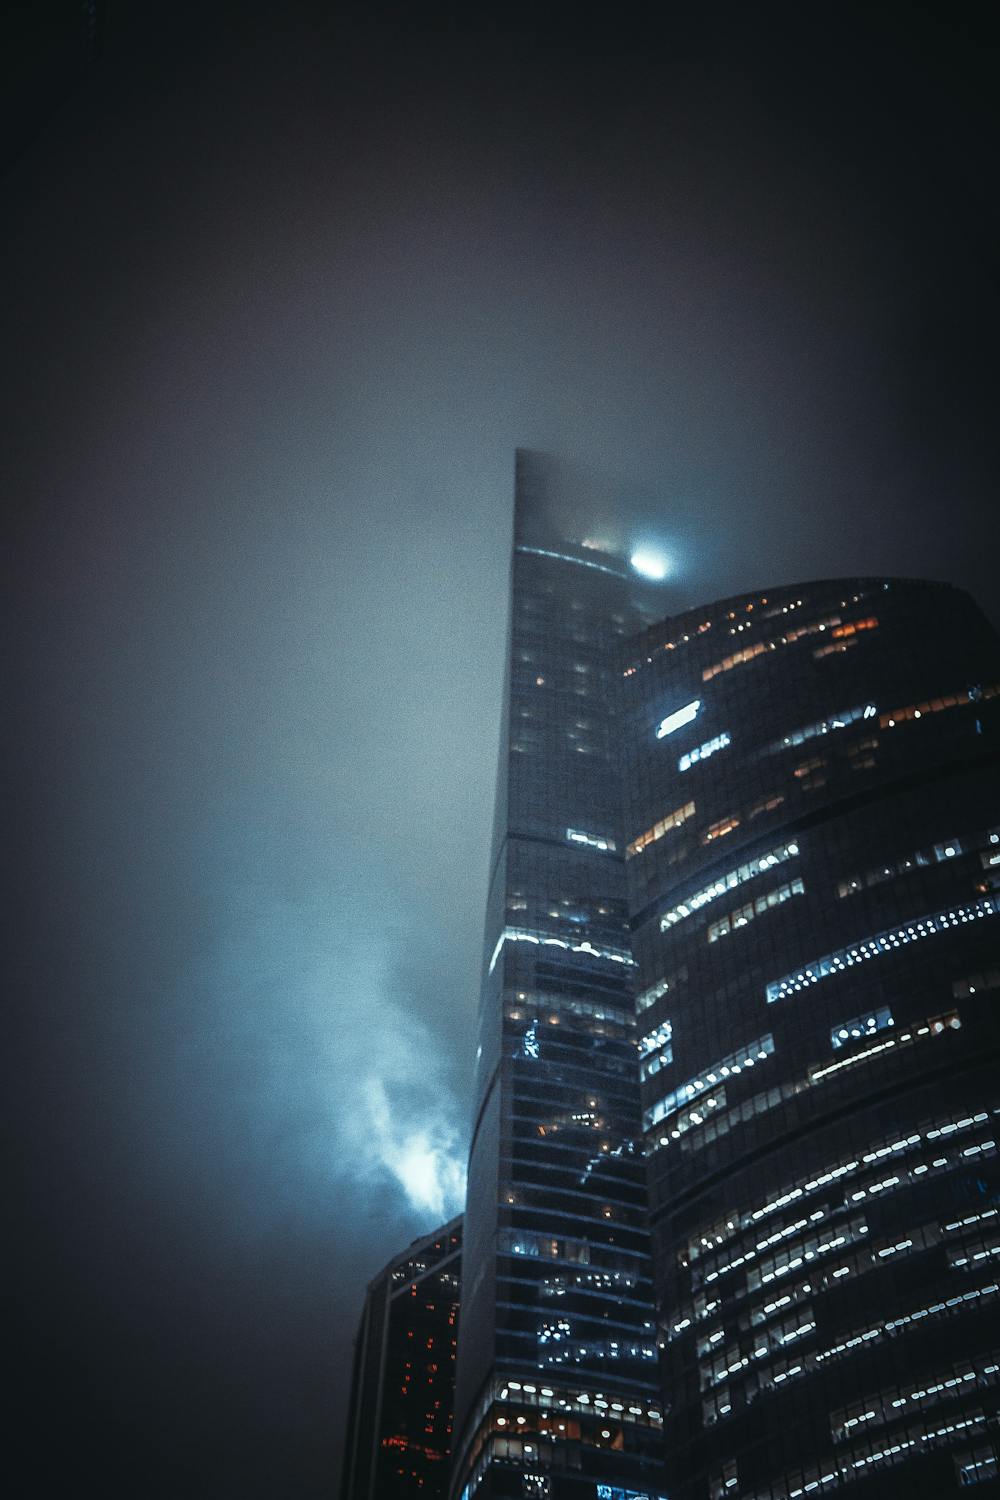 Free stock photo of buildings, bulding, night city